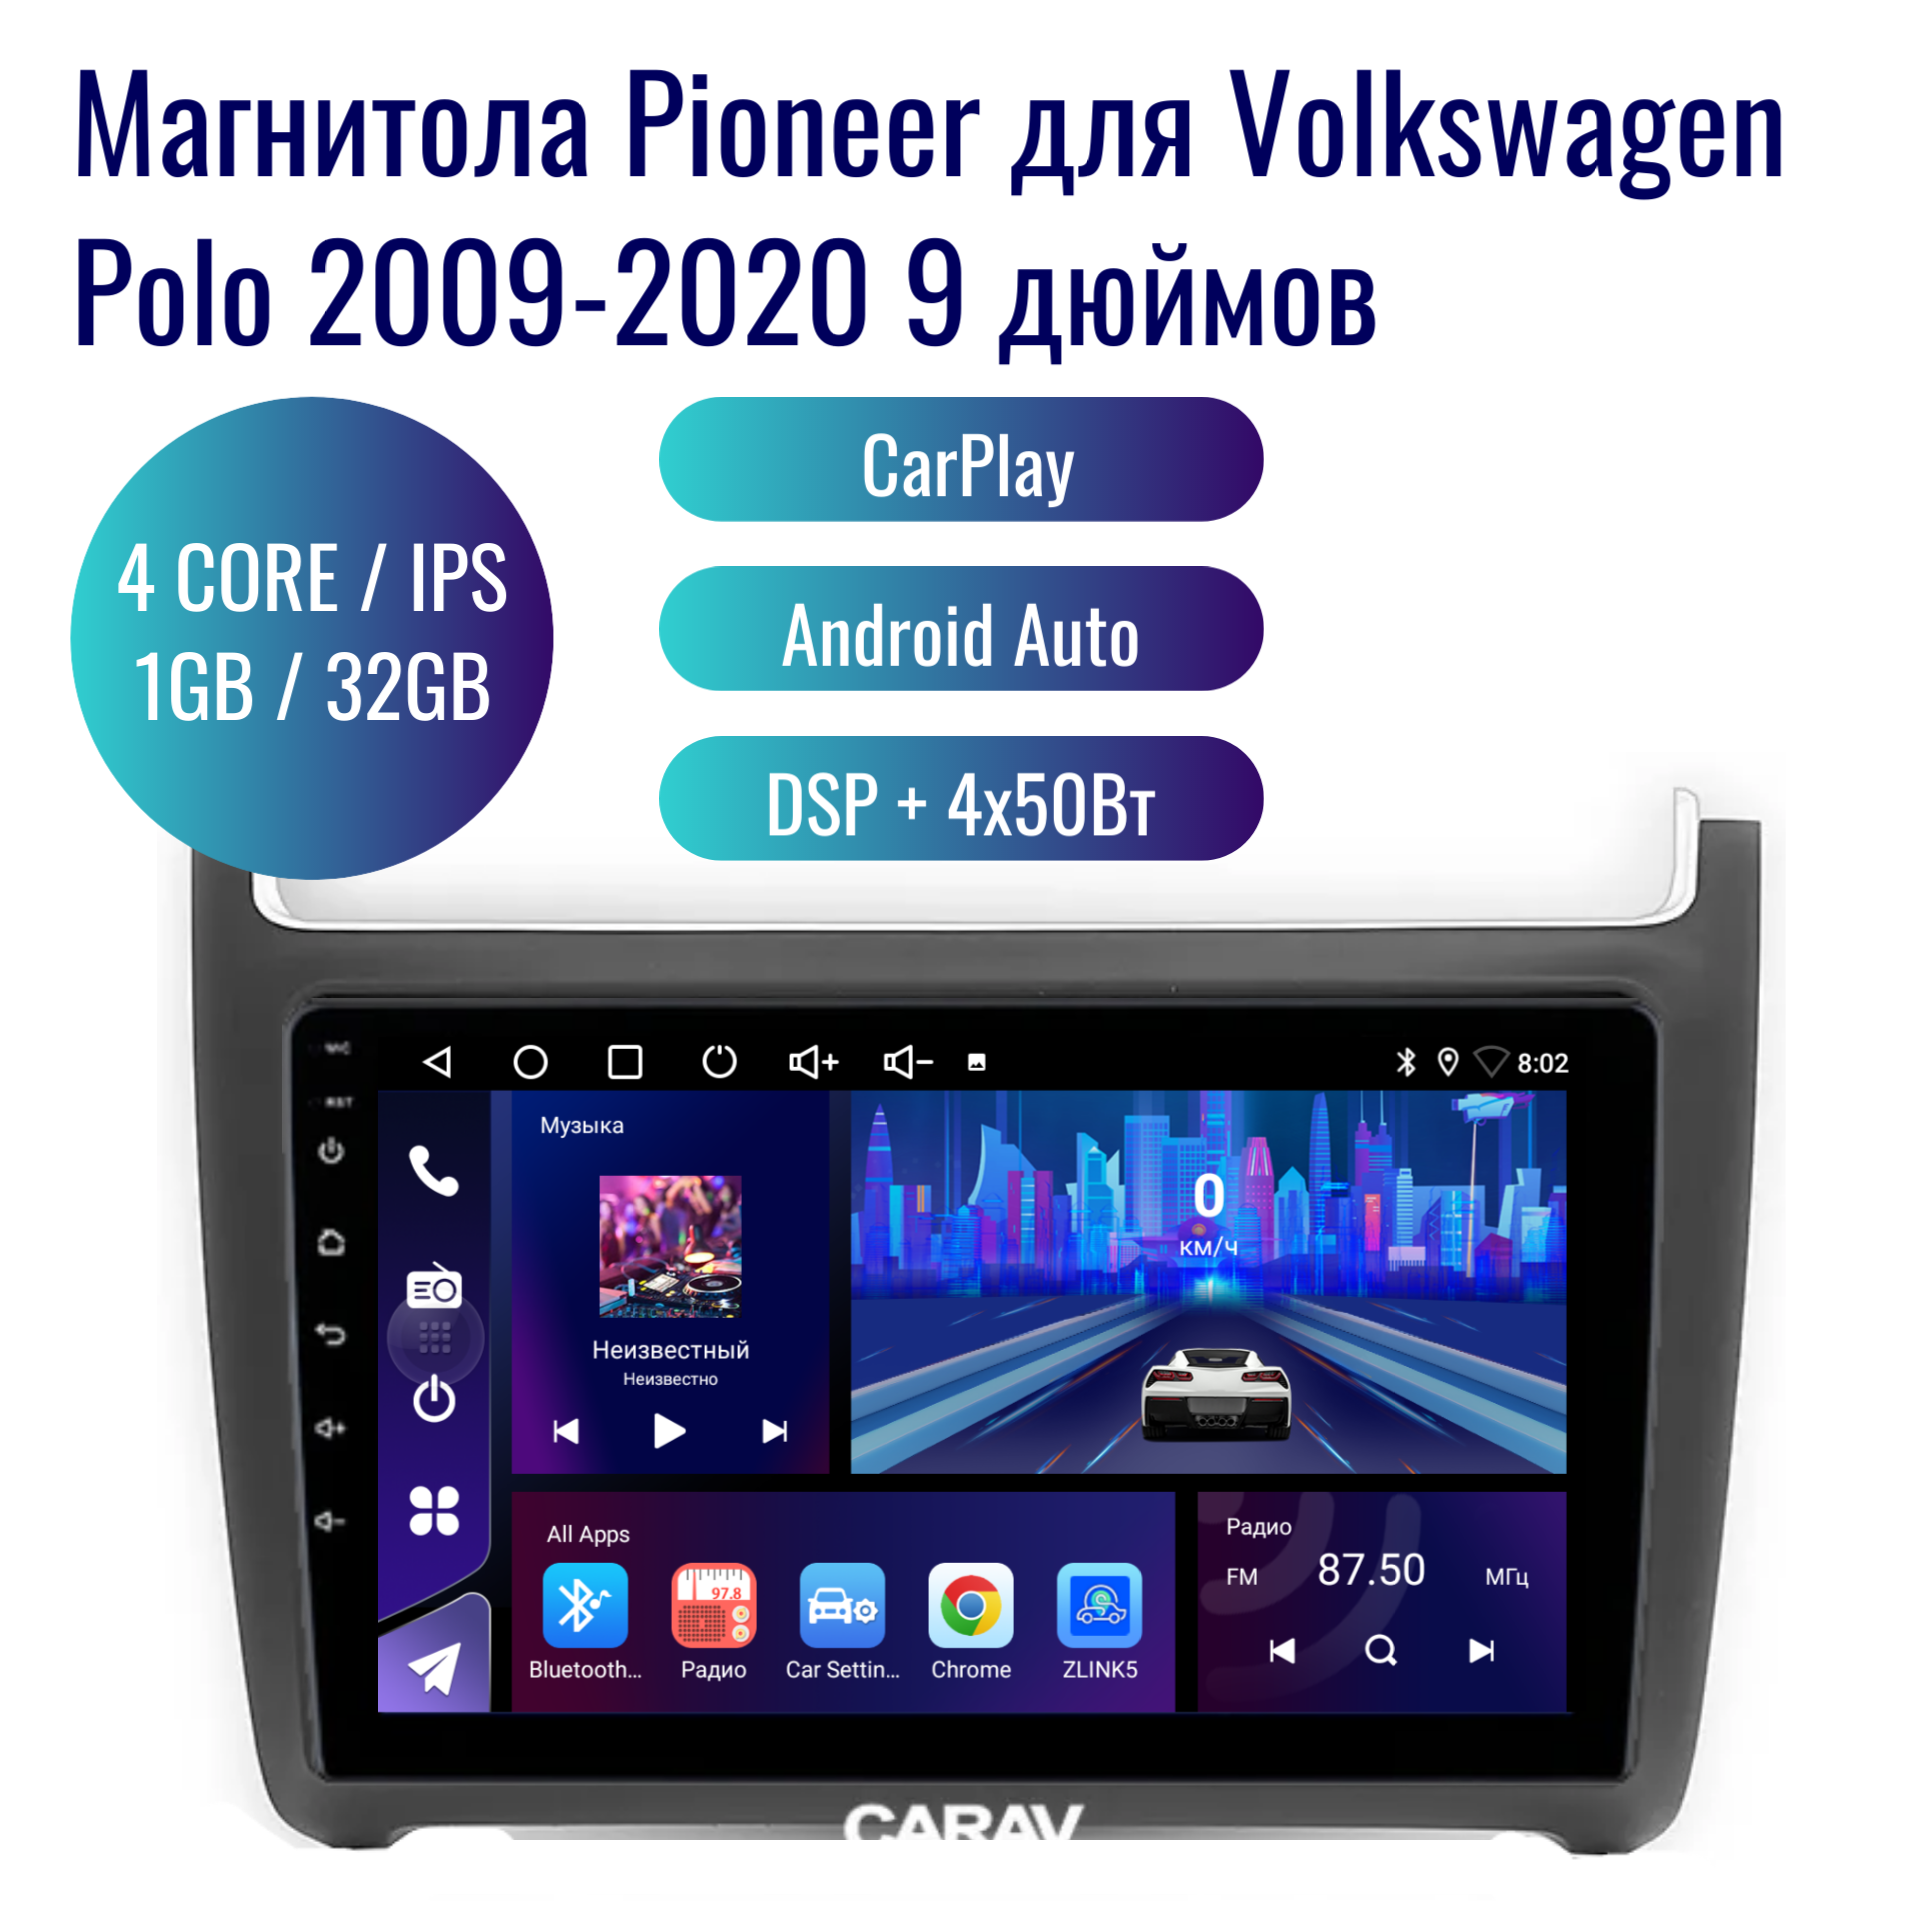 Автомагнитола Pioneer Android Volkswagen Polo 2009-2020 / 4 ядер 1Gb+32Gb / 9 дюймов / GPS / Bluetooth / Wi-Fi / 2din / навигатор